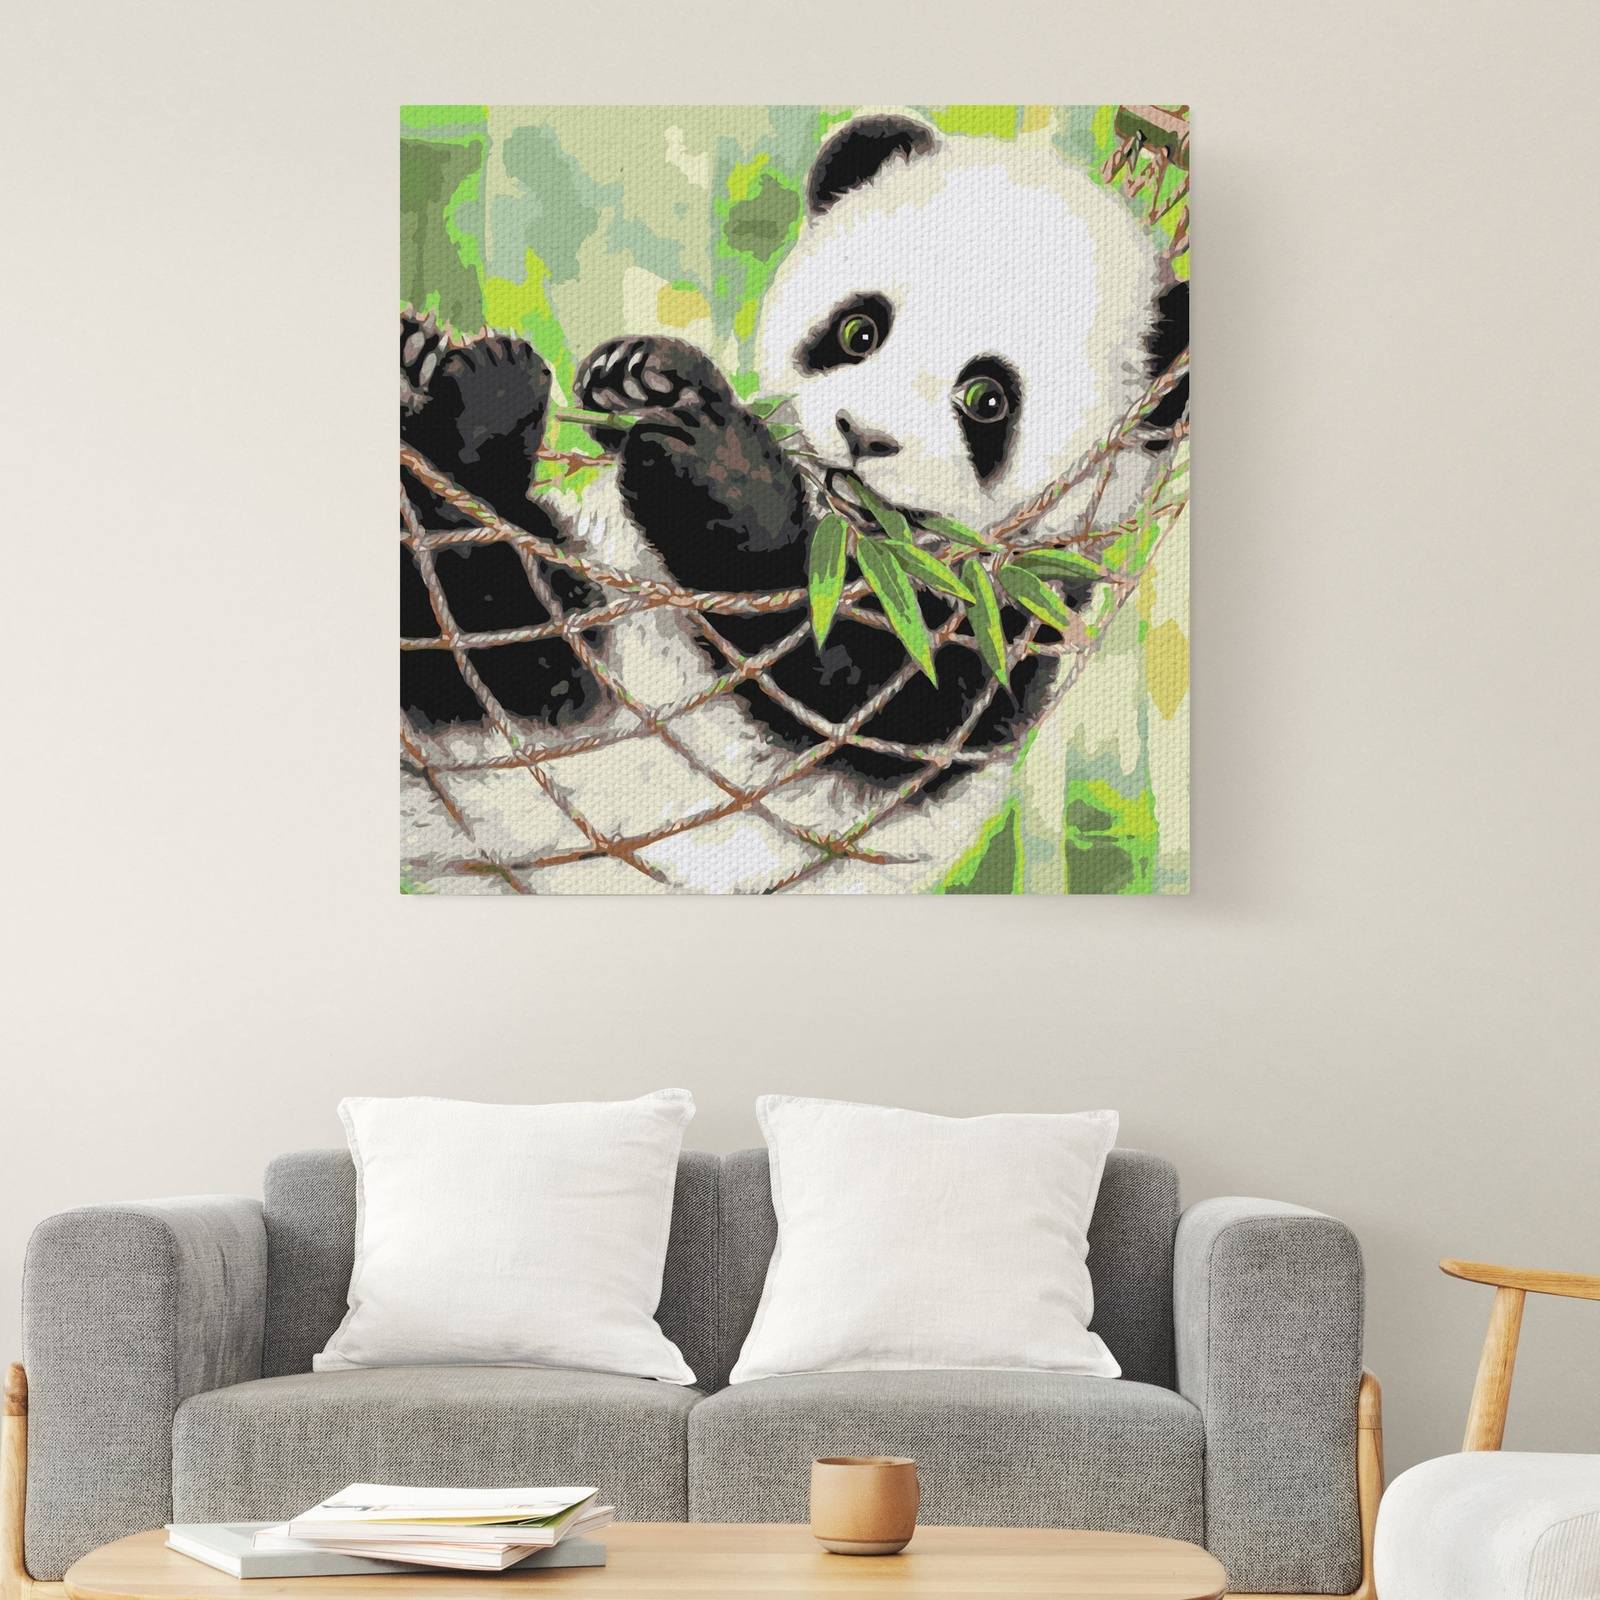 Cute Panda (Cdc0171)